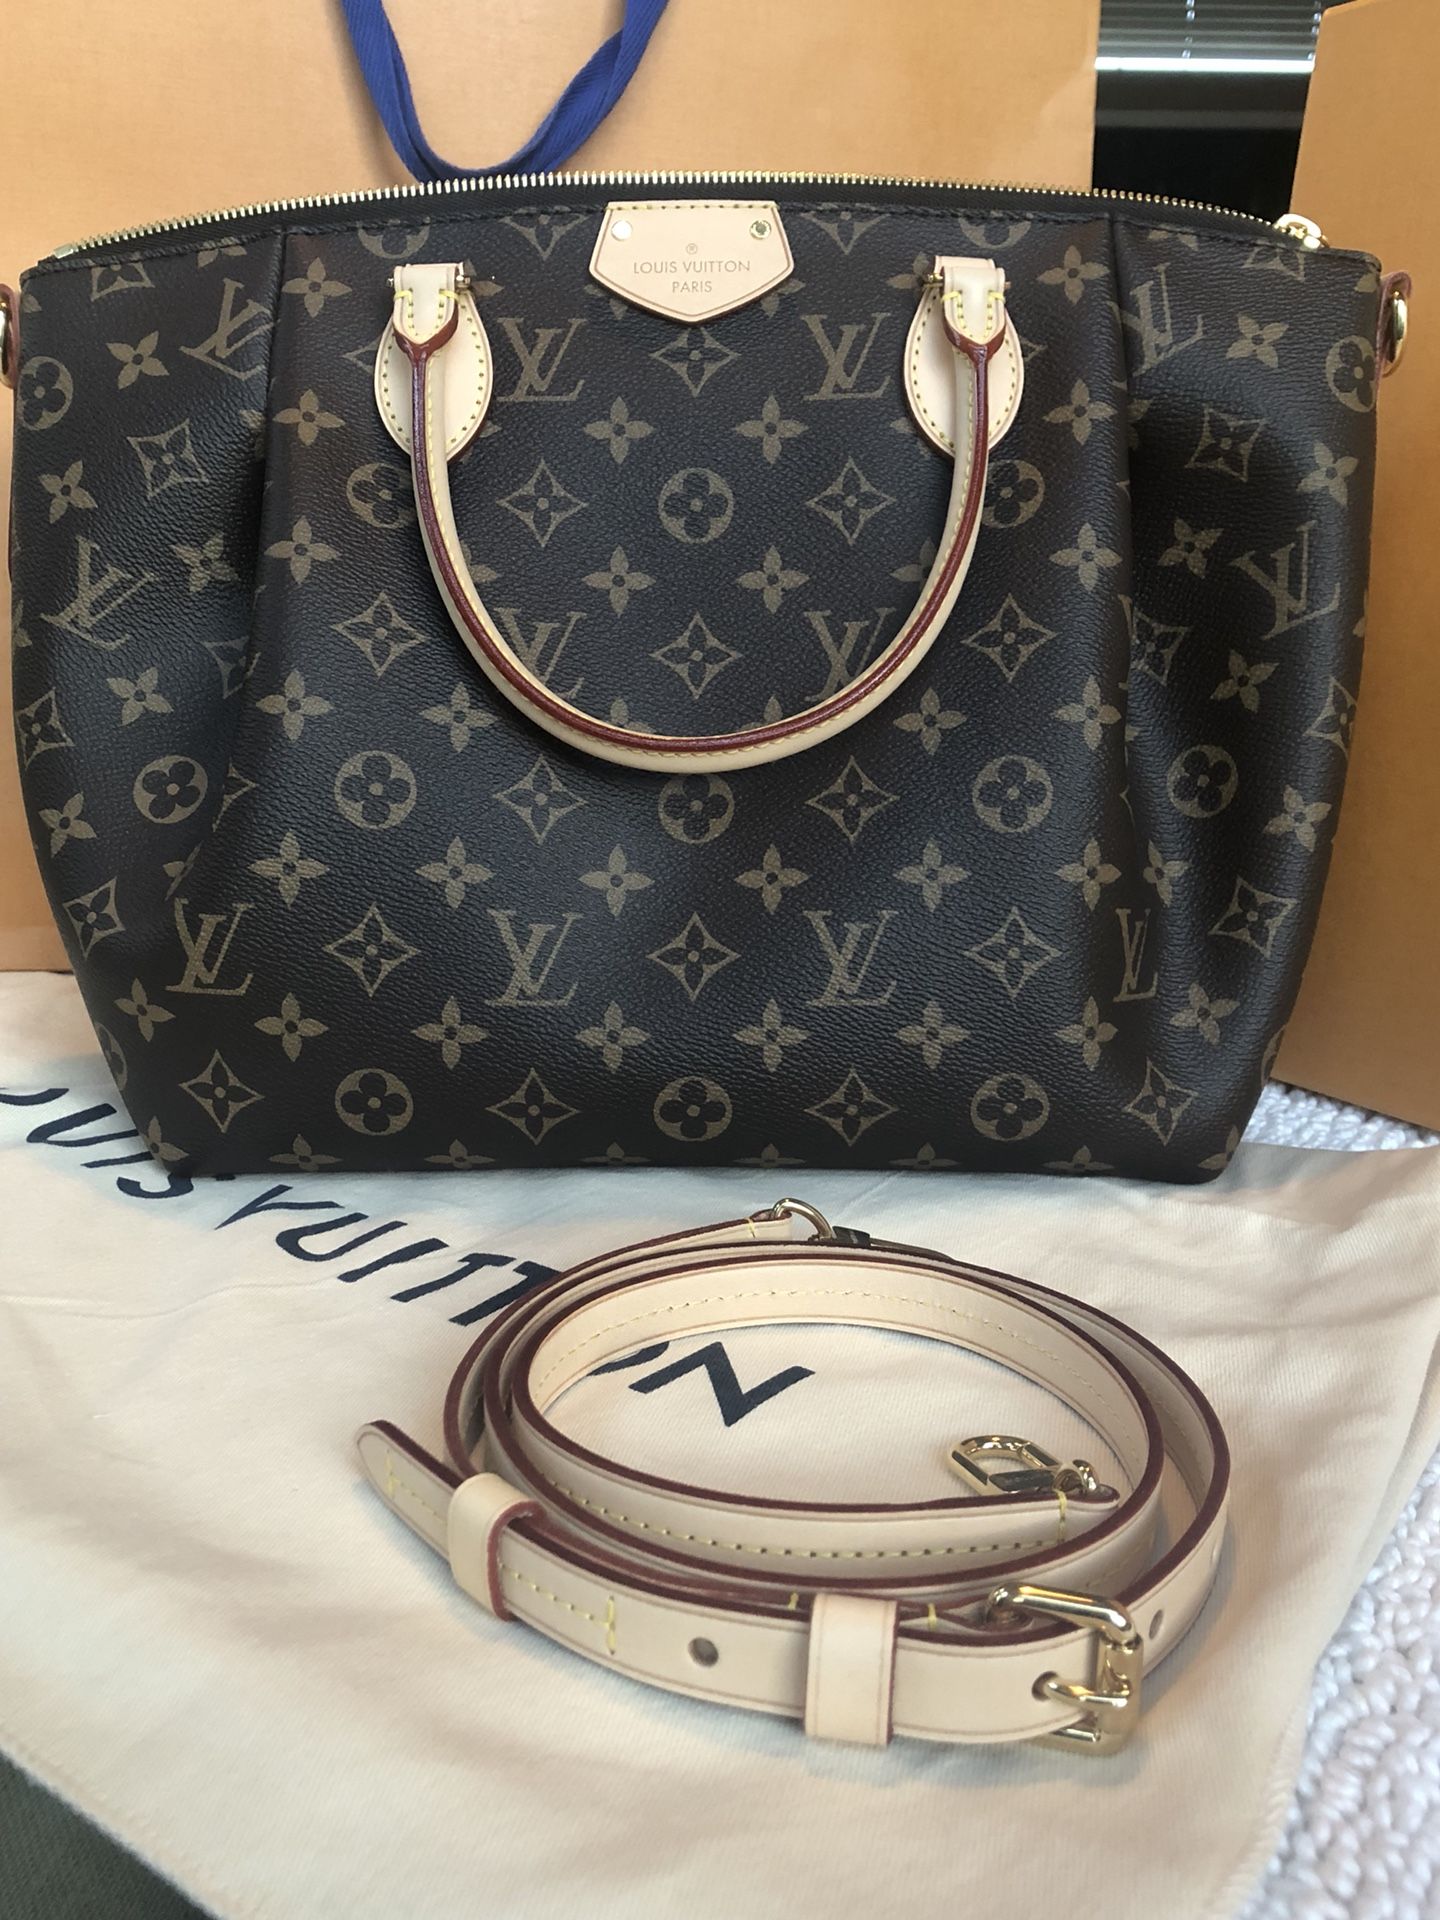 LOUIS VUITTON Turenne MM Handbag NEW w/tags, box, bag, leather strap. AUTHENTIC